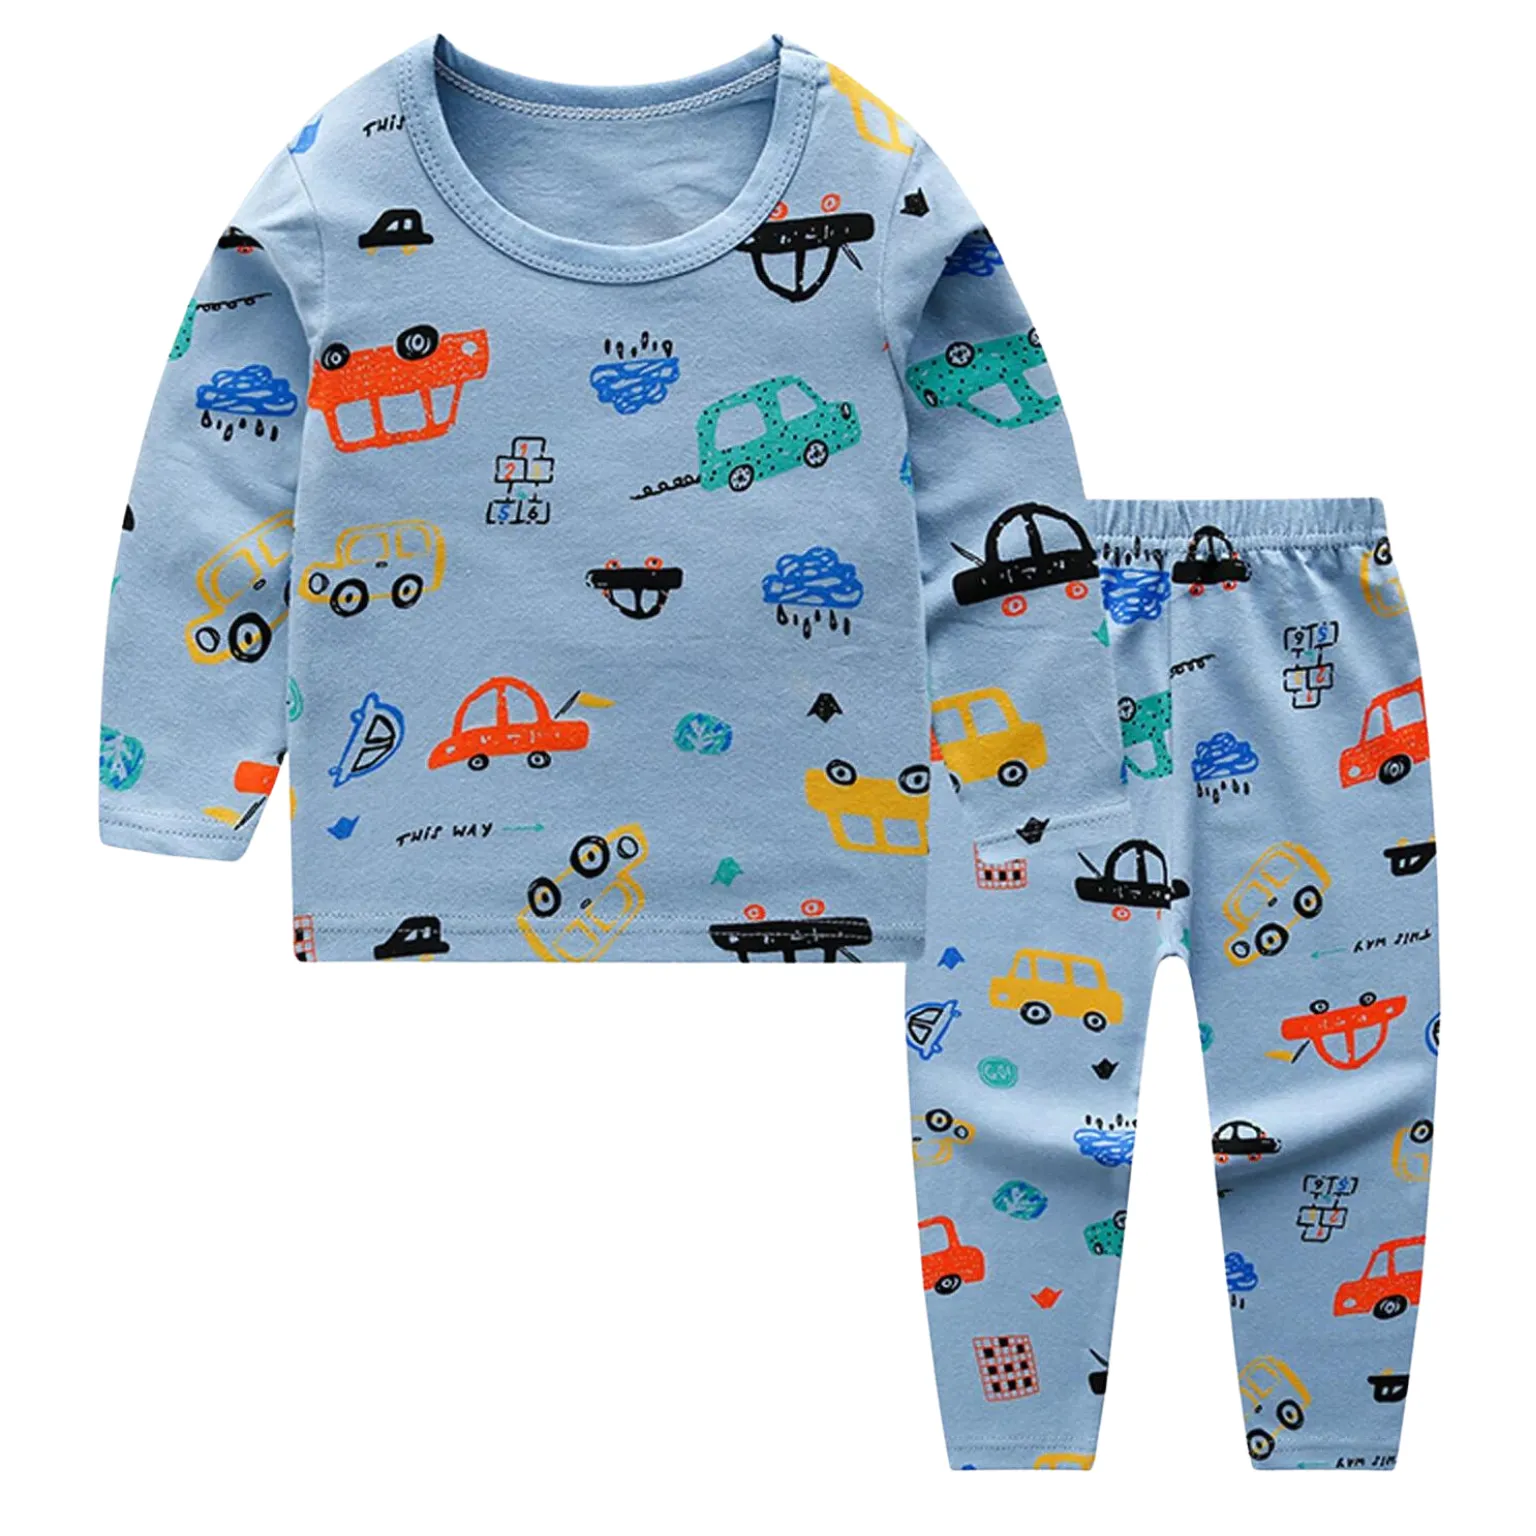 Toddler Pajamas manufacturing with trendy design